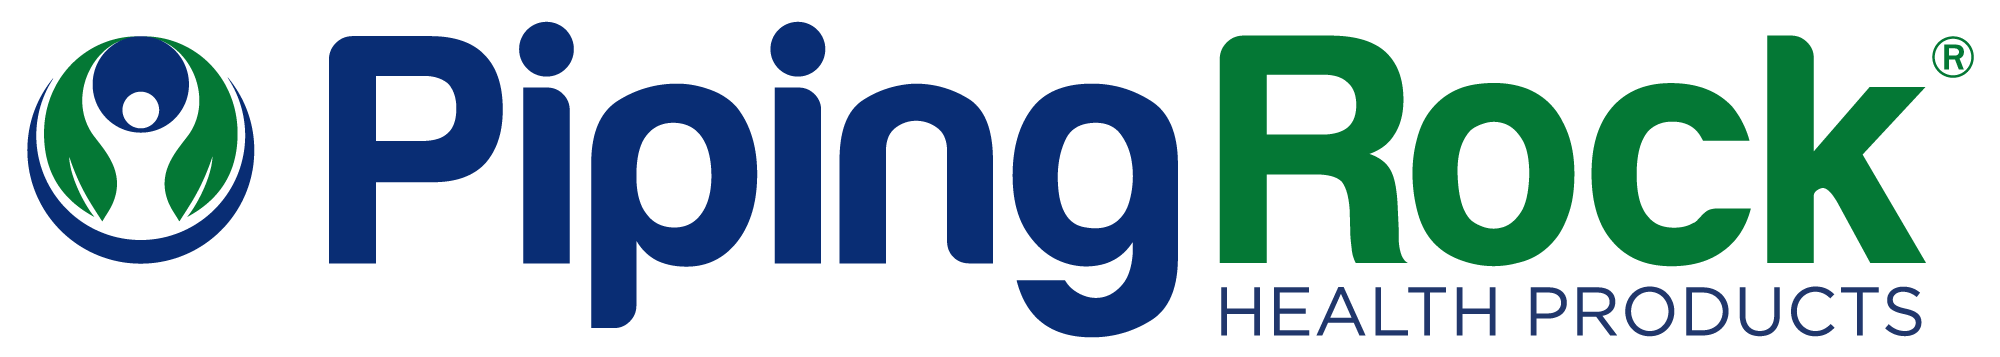 Piping Rock Health Products, LLC logo